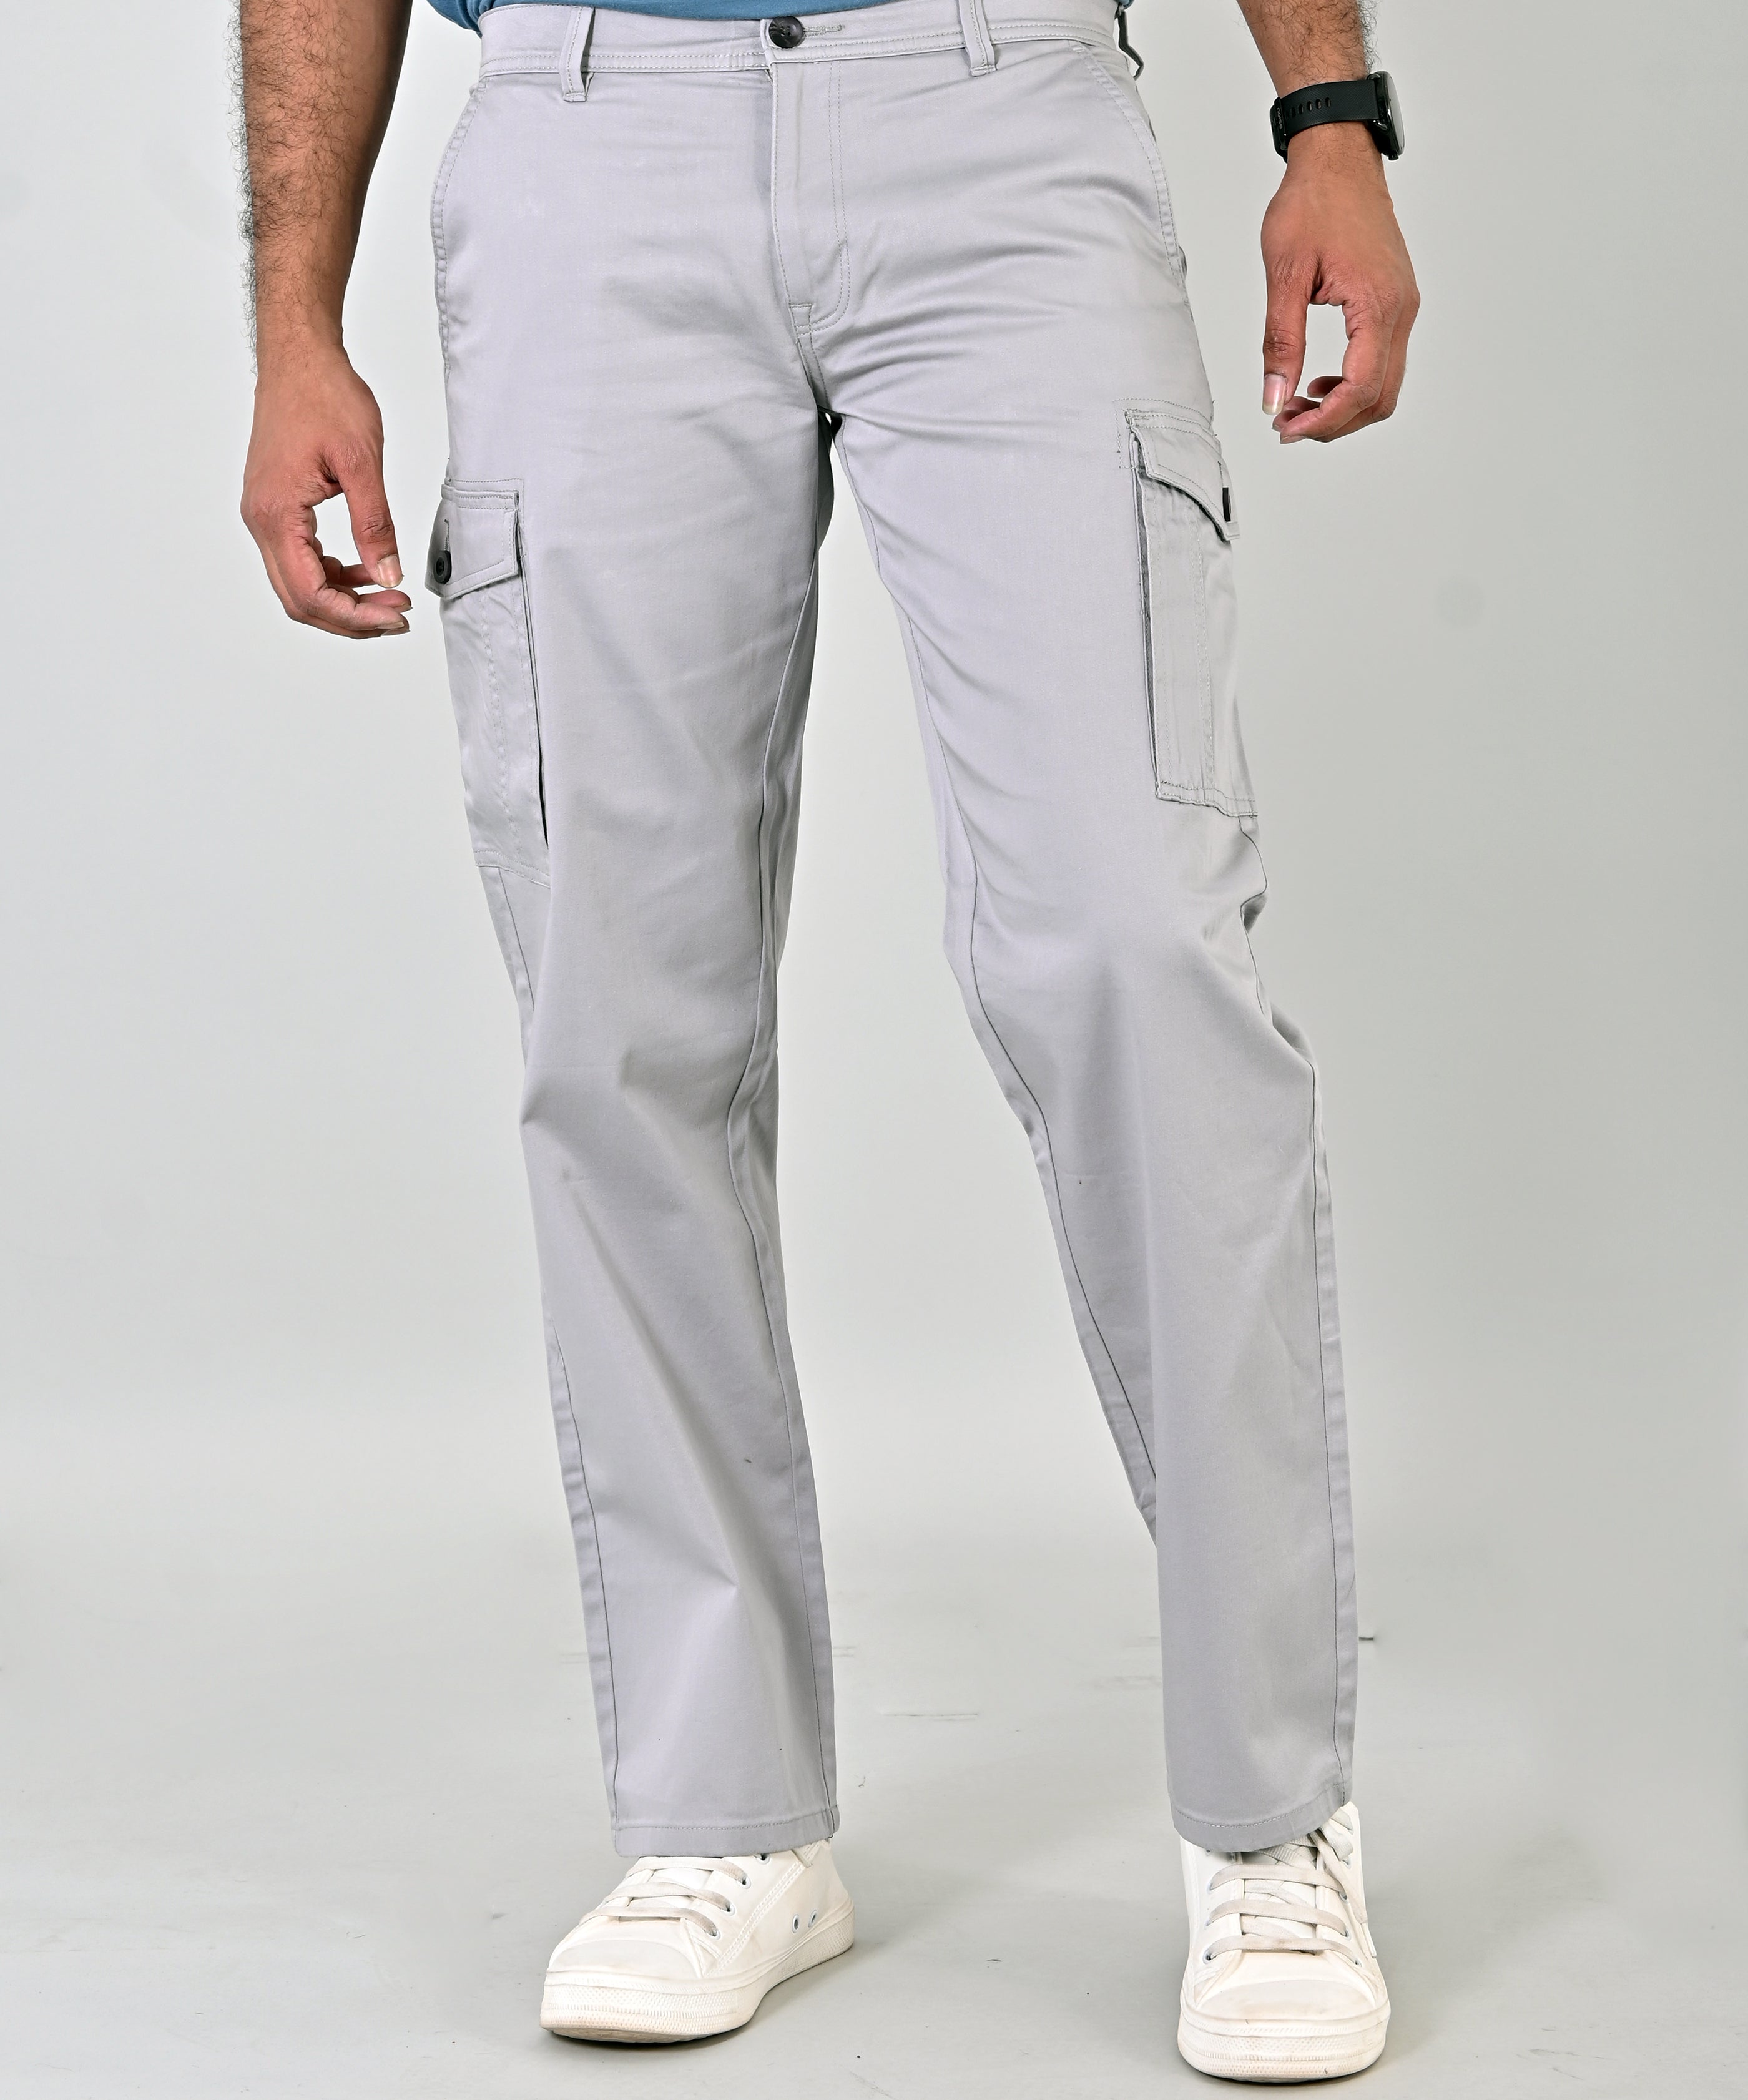 Women's mid-rise, straight leg, taped cotton cargo pants - BPL6115T -  Bisley Workwear